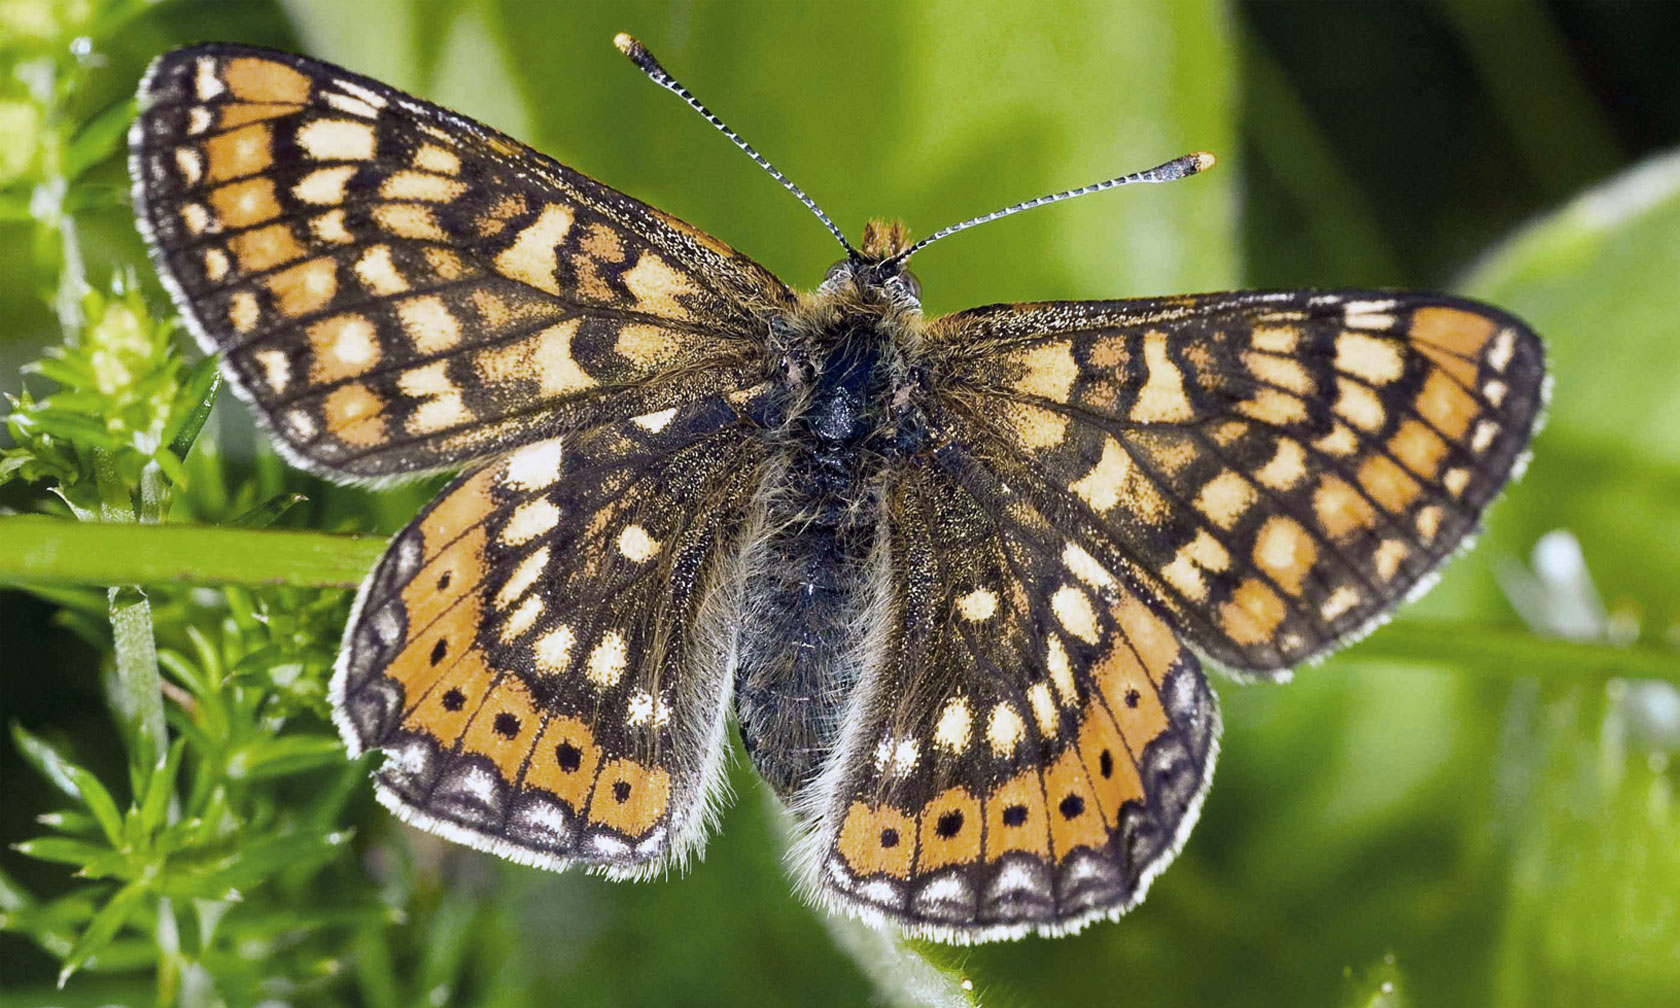 A marsh fritillary butterfly